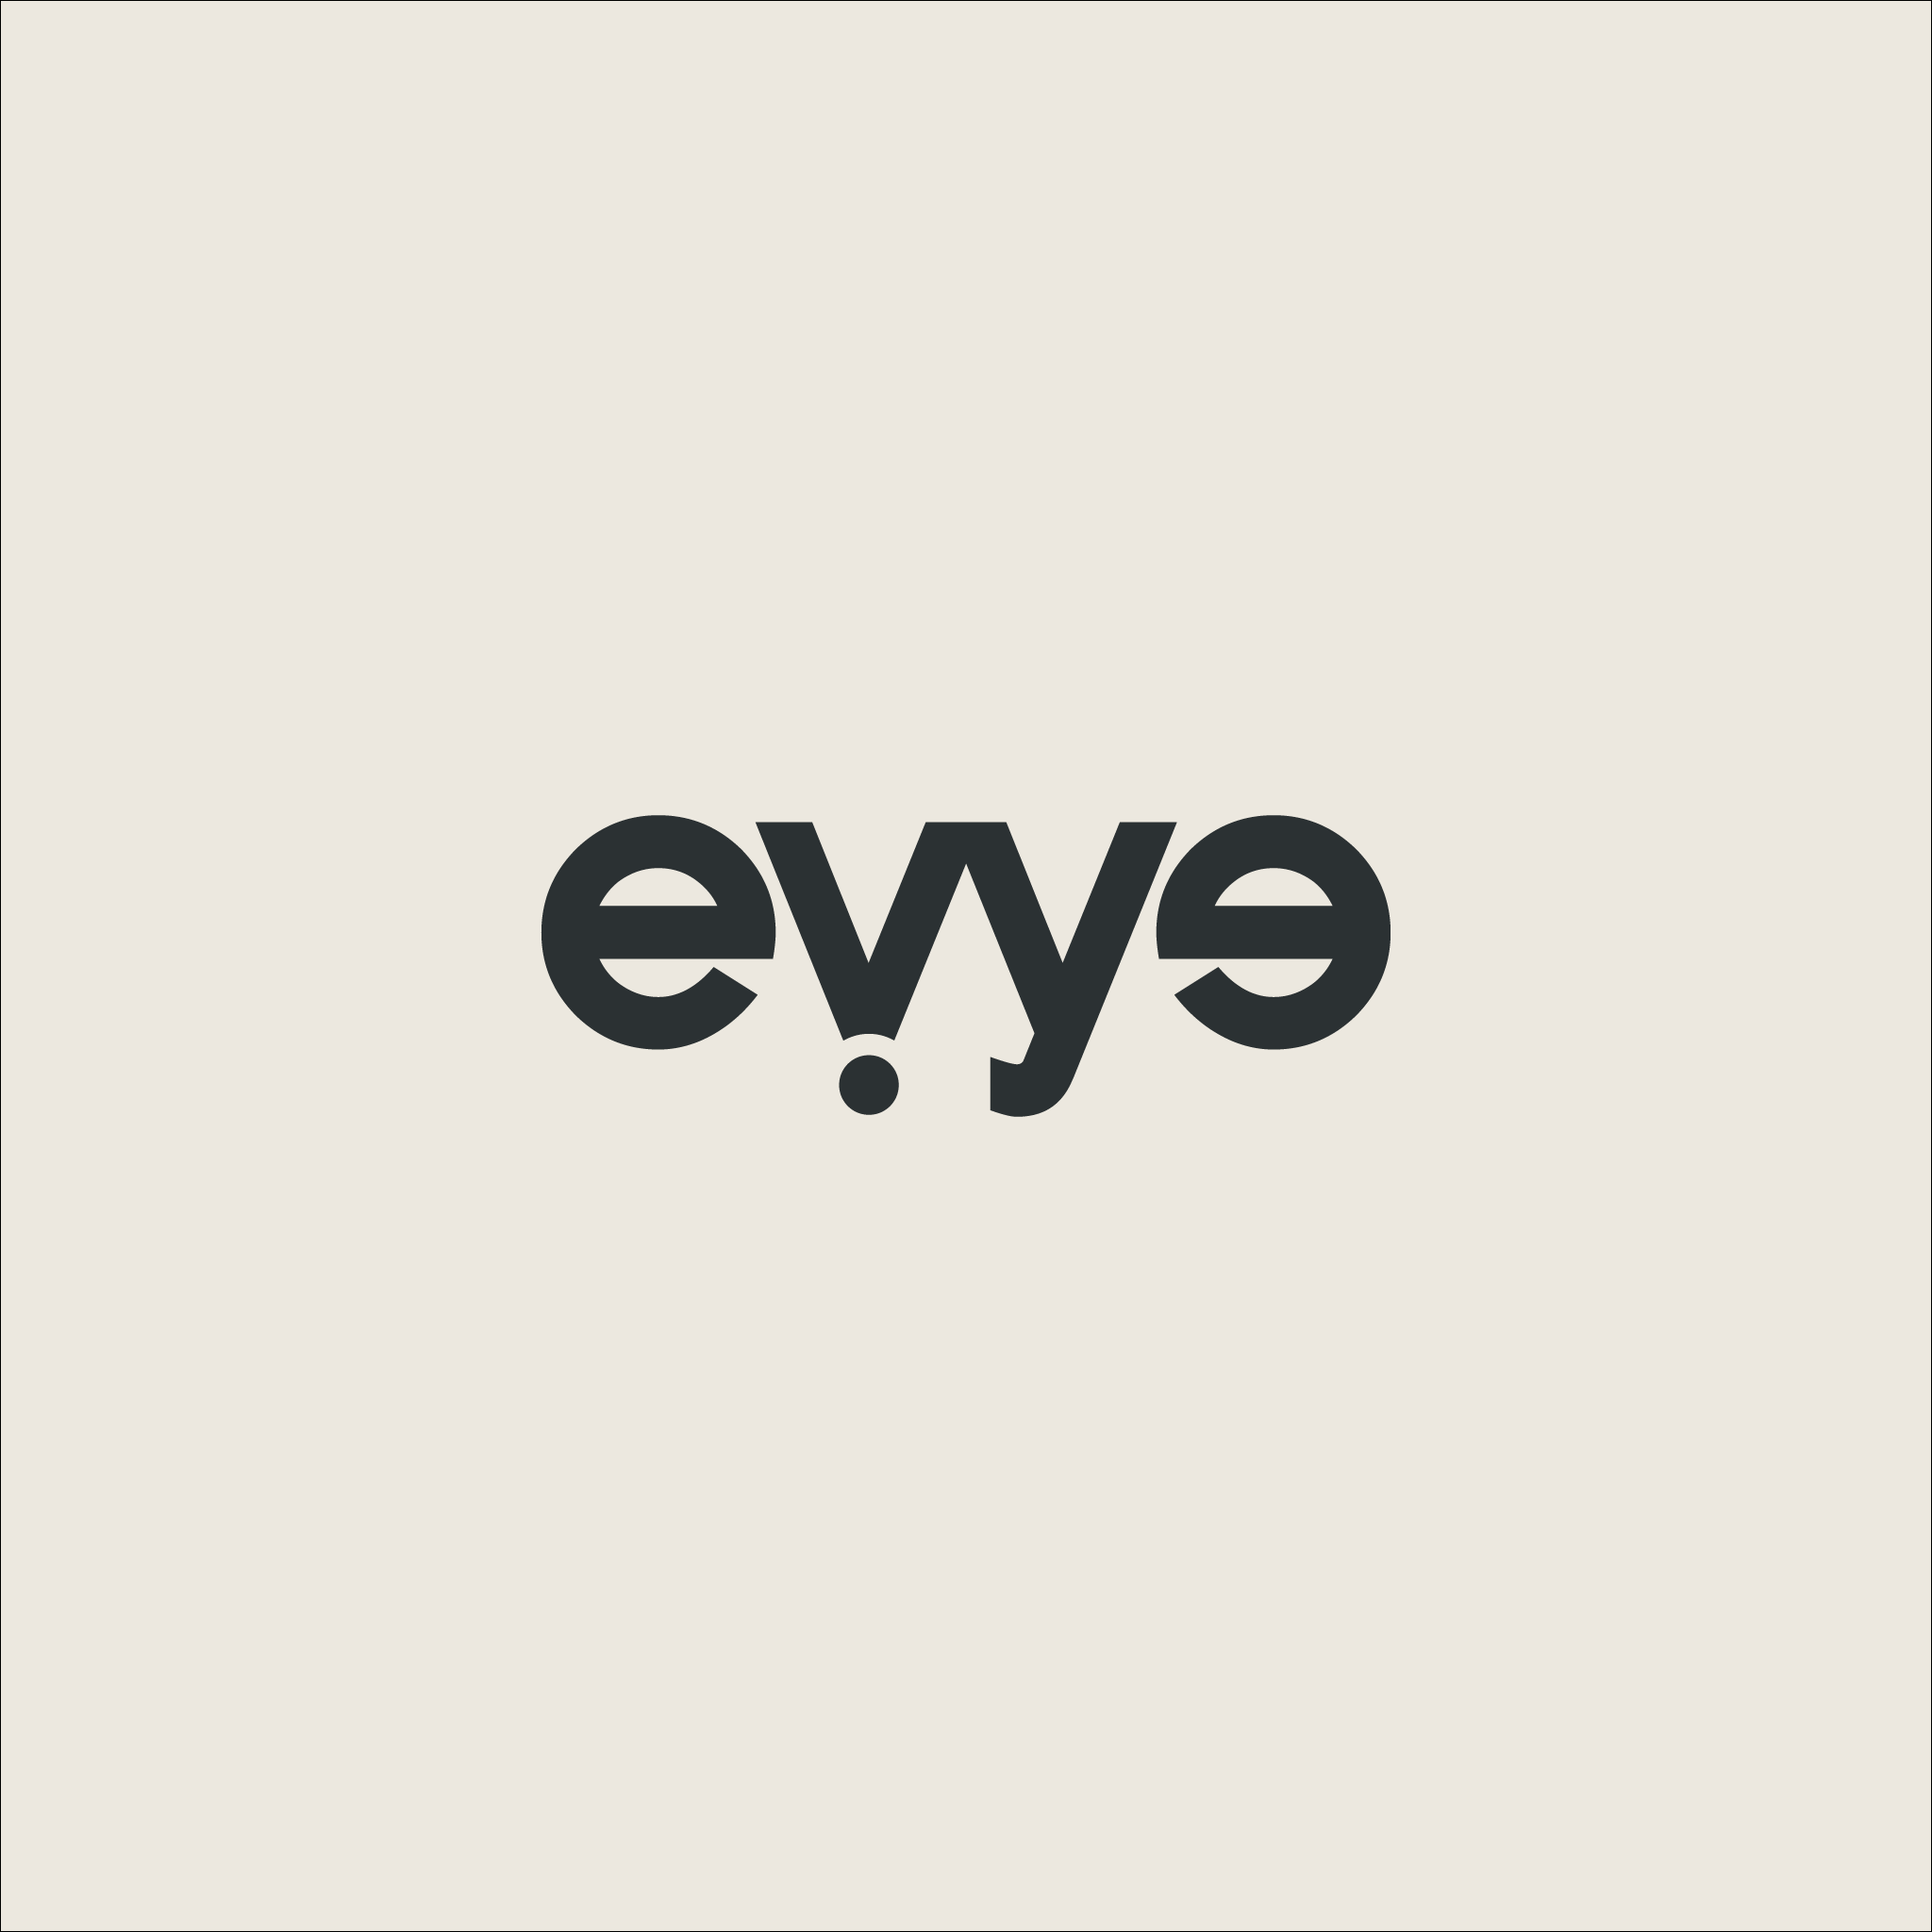 Evye Llp logo